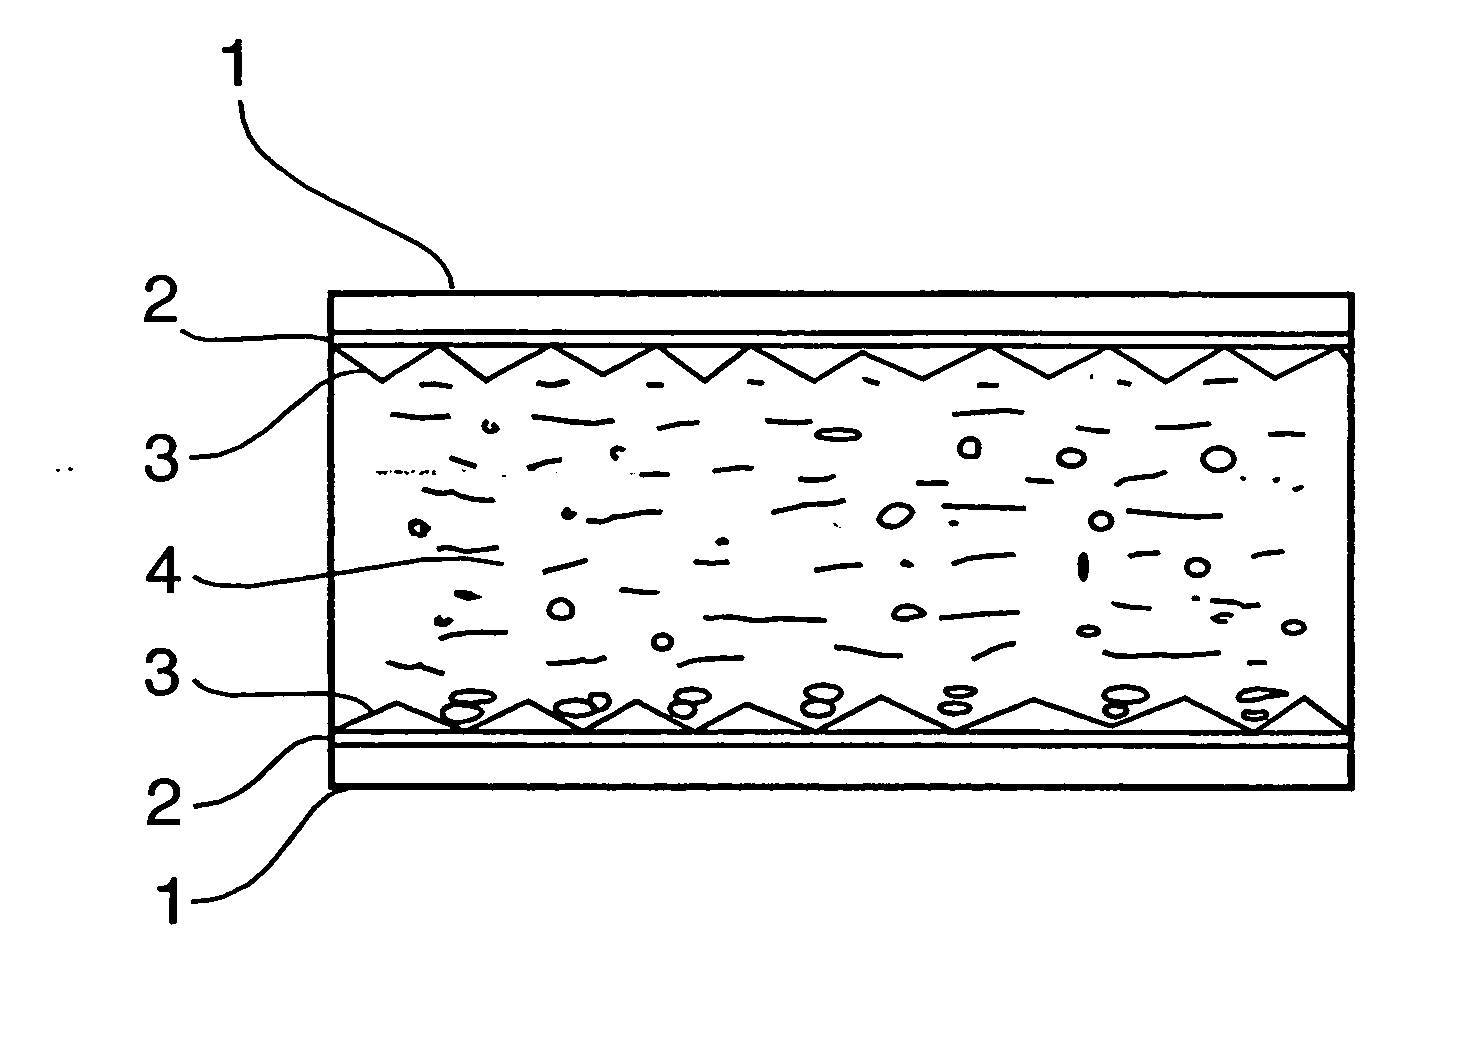 Bistable nematic liquid crystal device